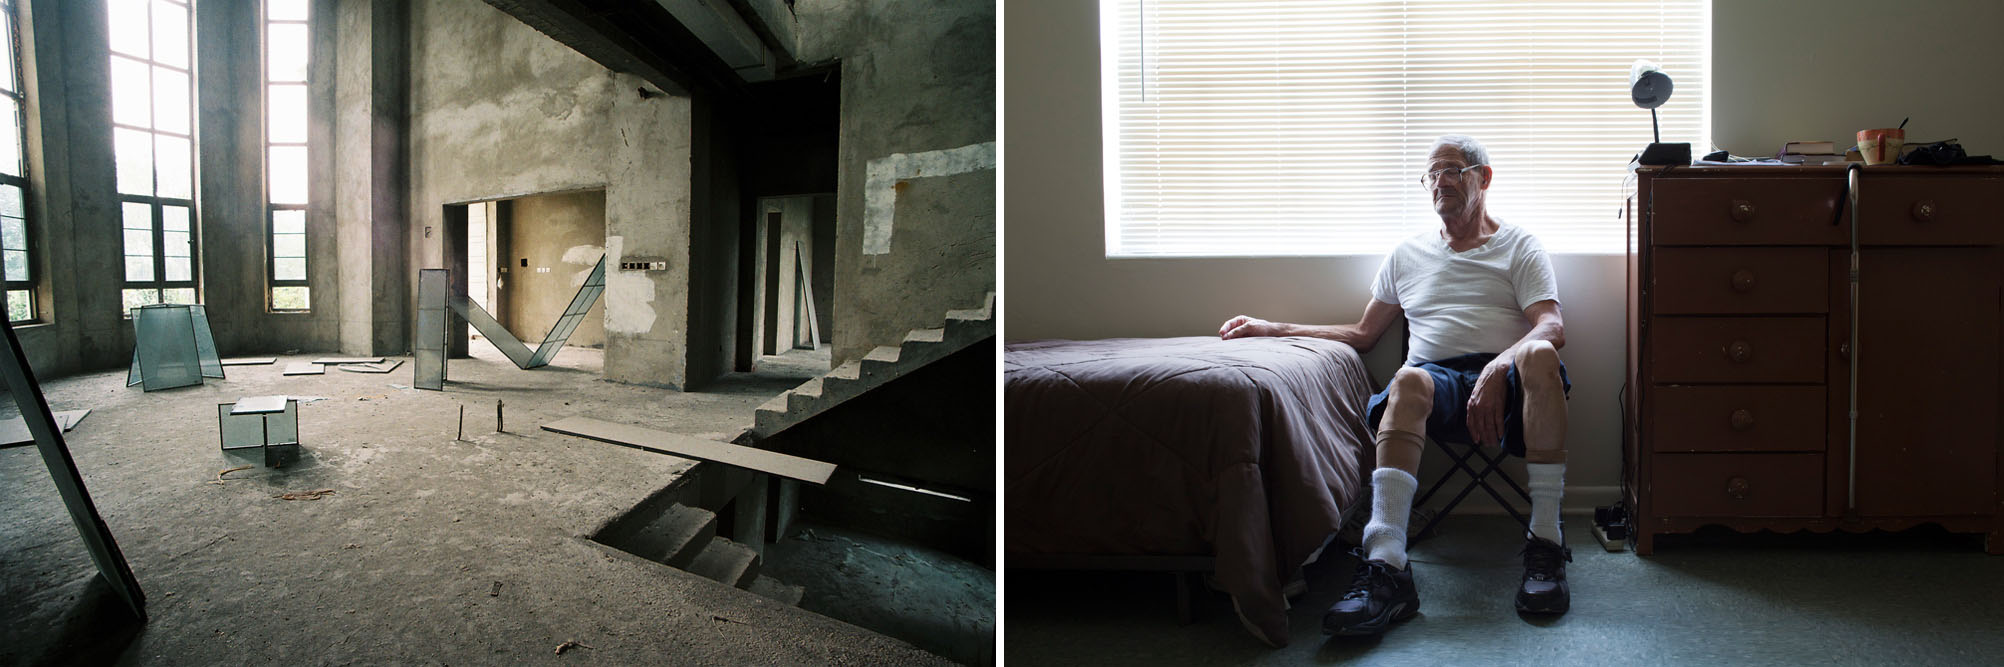 Andi Schmied, "Glass House", 2014 | Sofia Valiente, "Paul", 2013